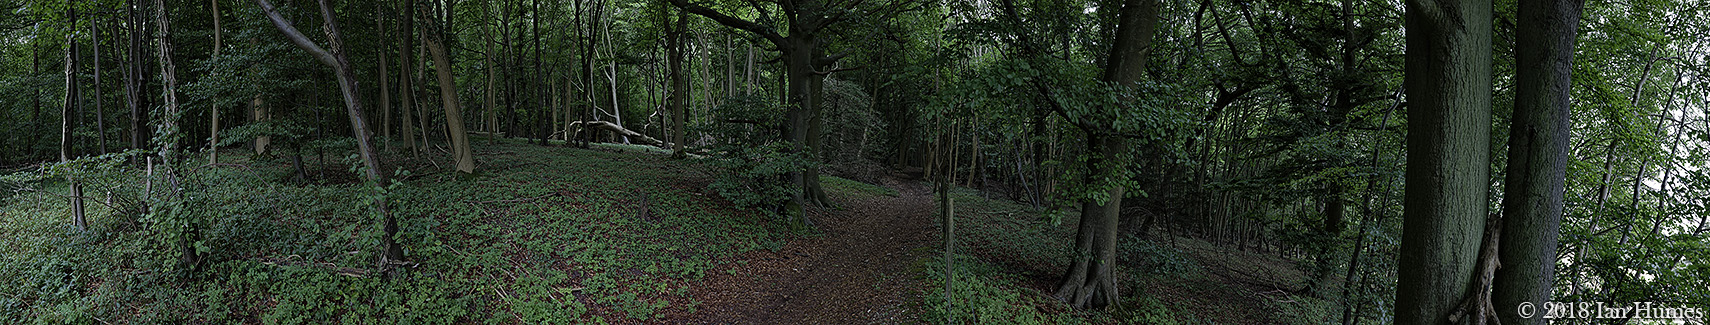 Stubbing's Wood - Hertfordshire